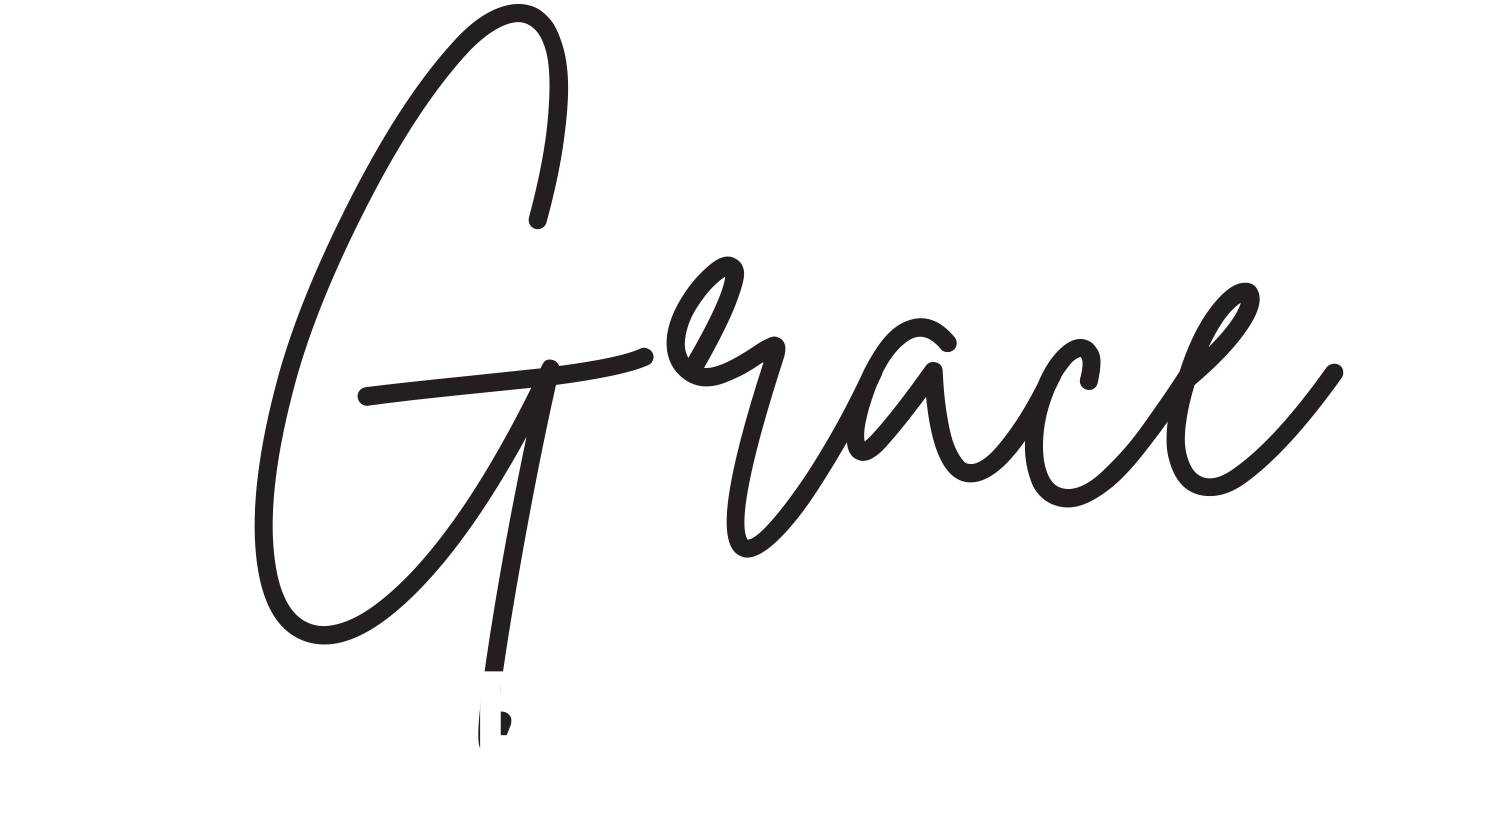 Grace Gladys Famoriyo Brands